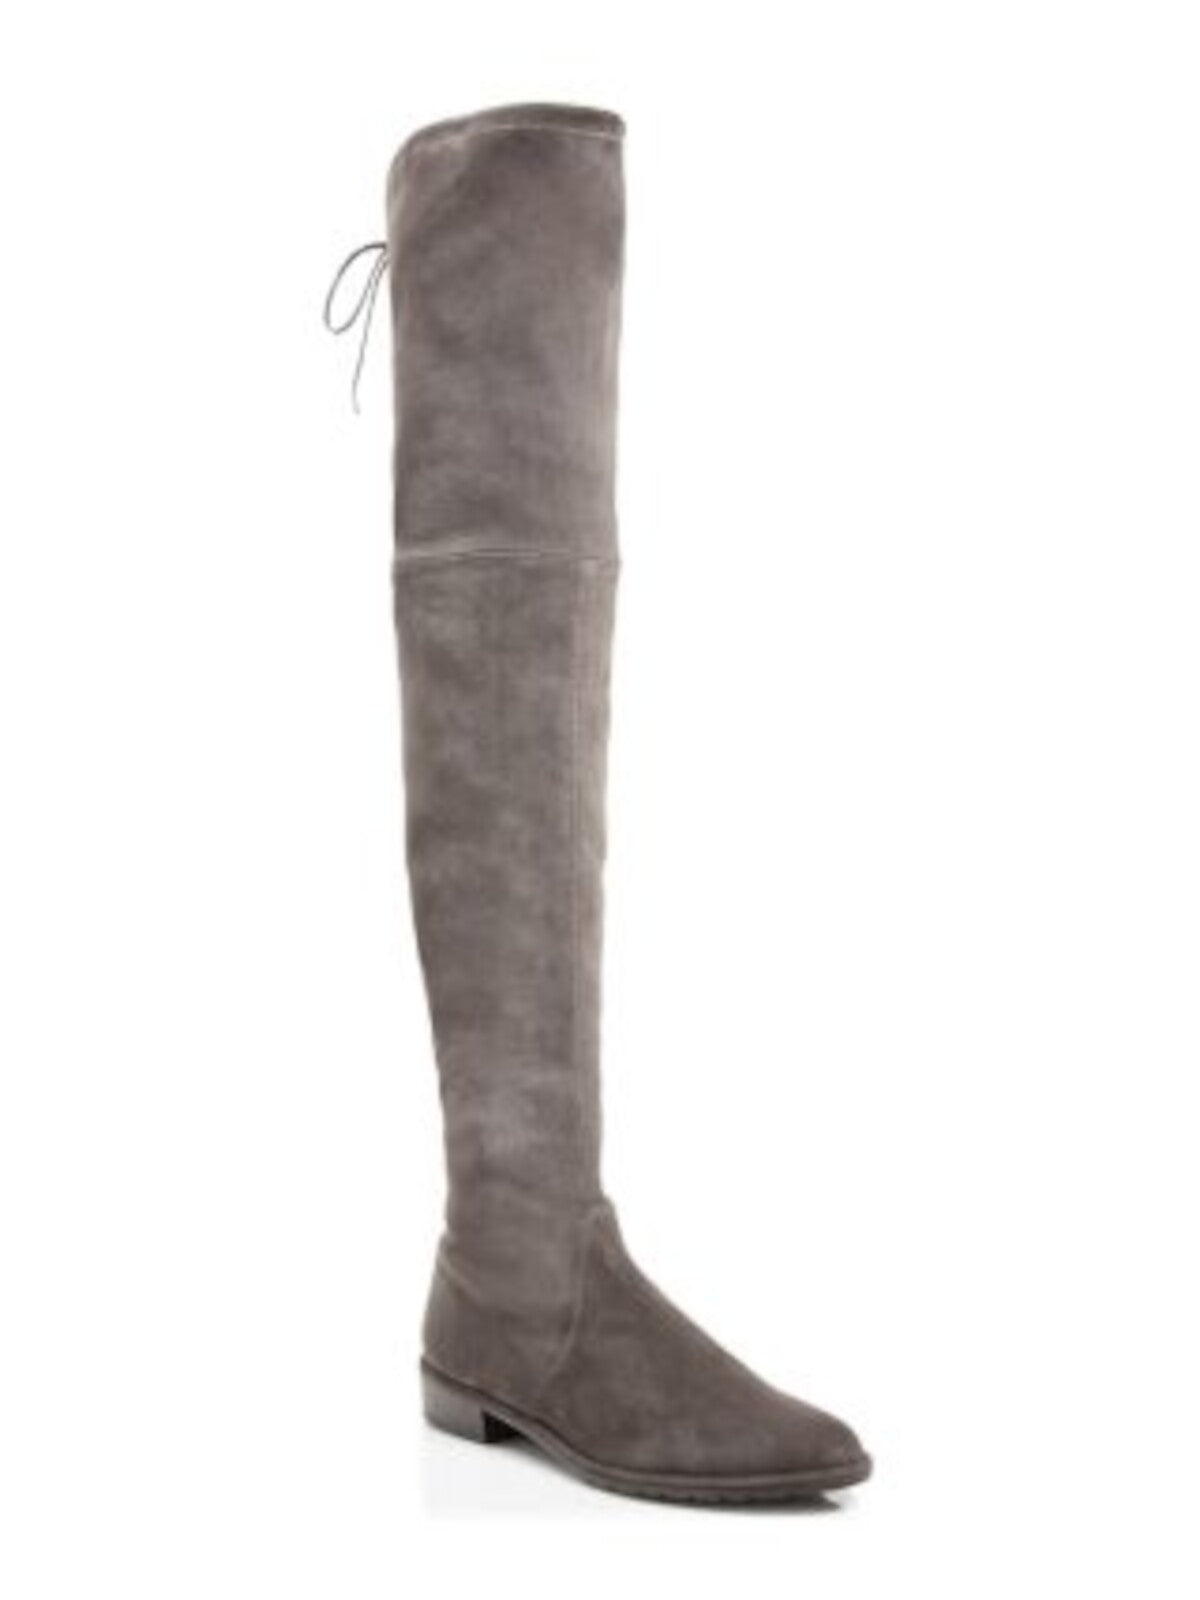 STUART WEITZMAN Womens Gray Comfort Lowland Round Toe Block Heel Lace-Up Leather Dress Boots 9 M